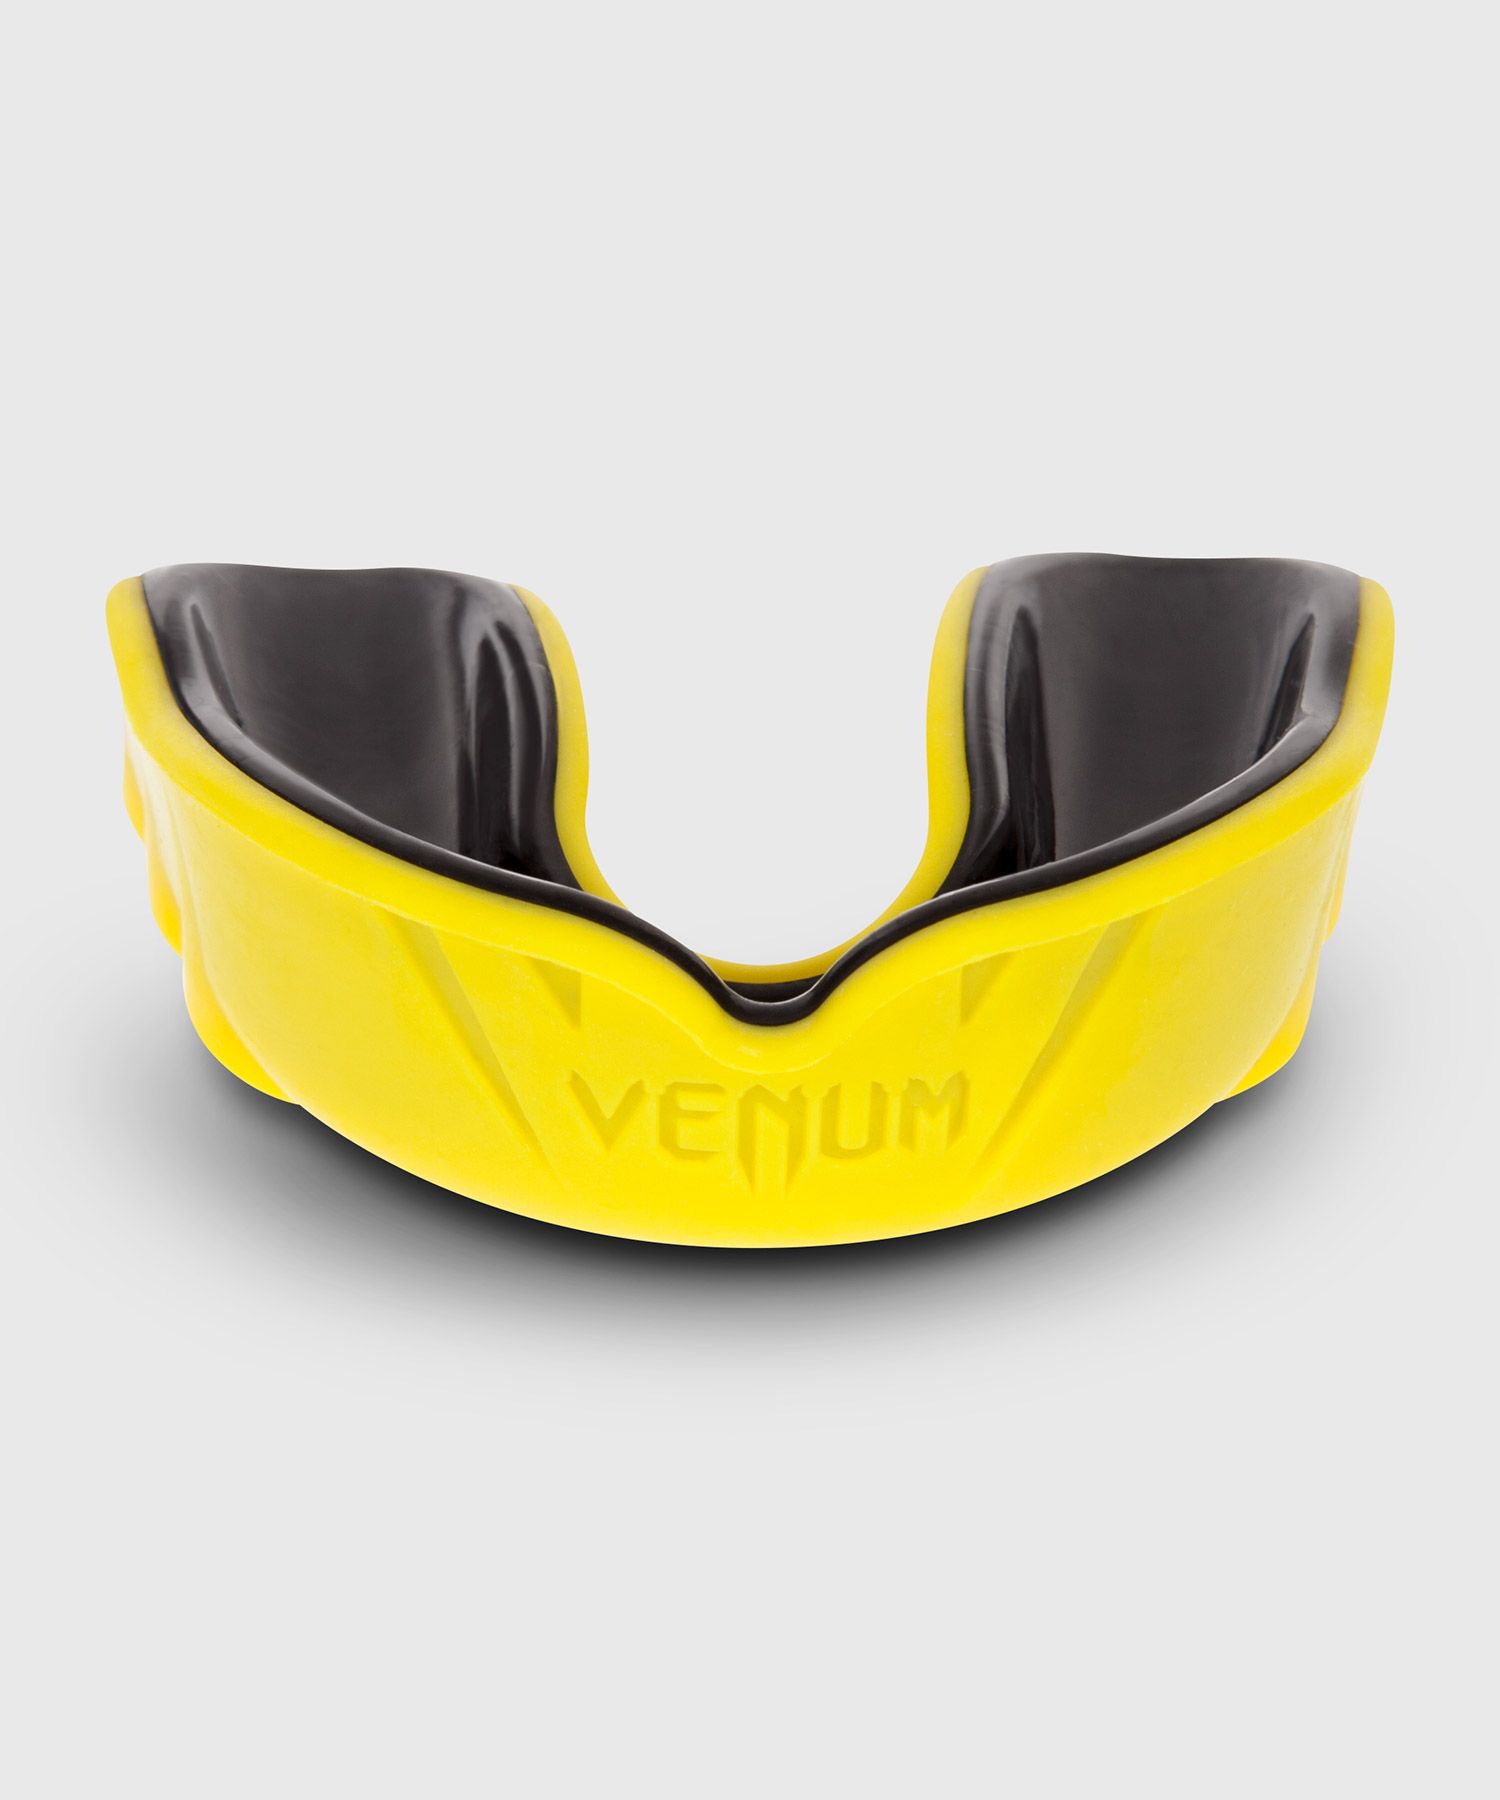 Venum Challenger Mouthguard - Yellow/Black